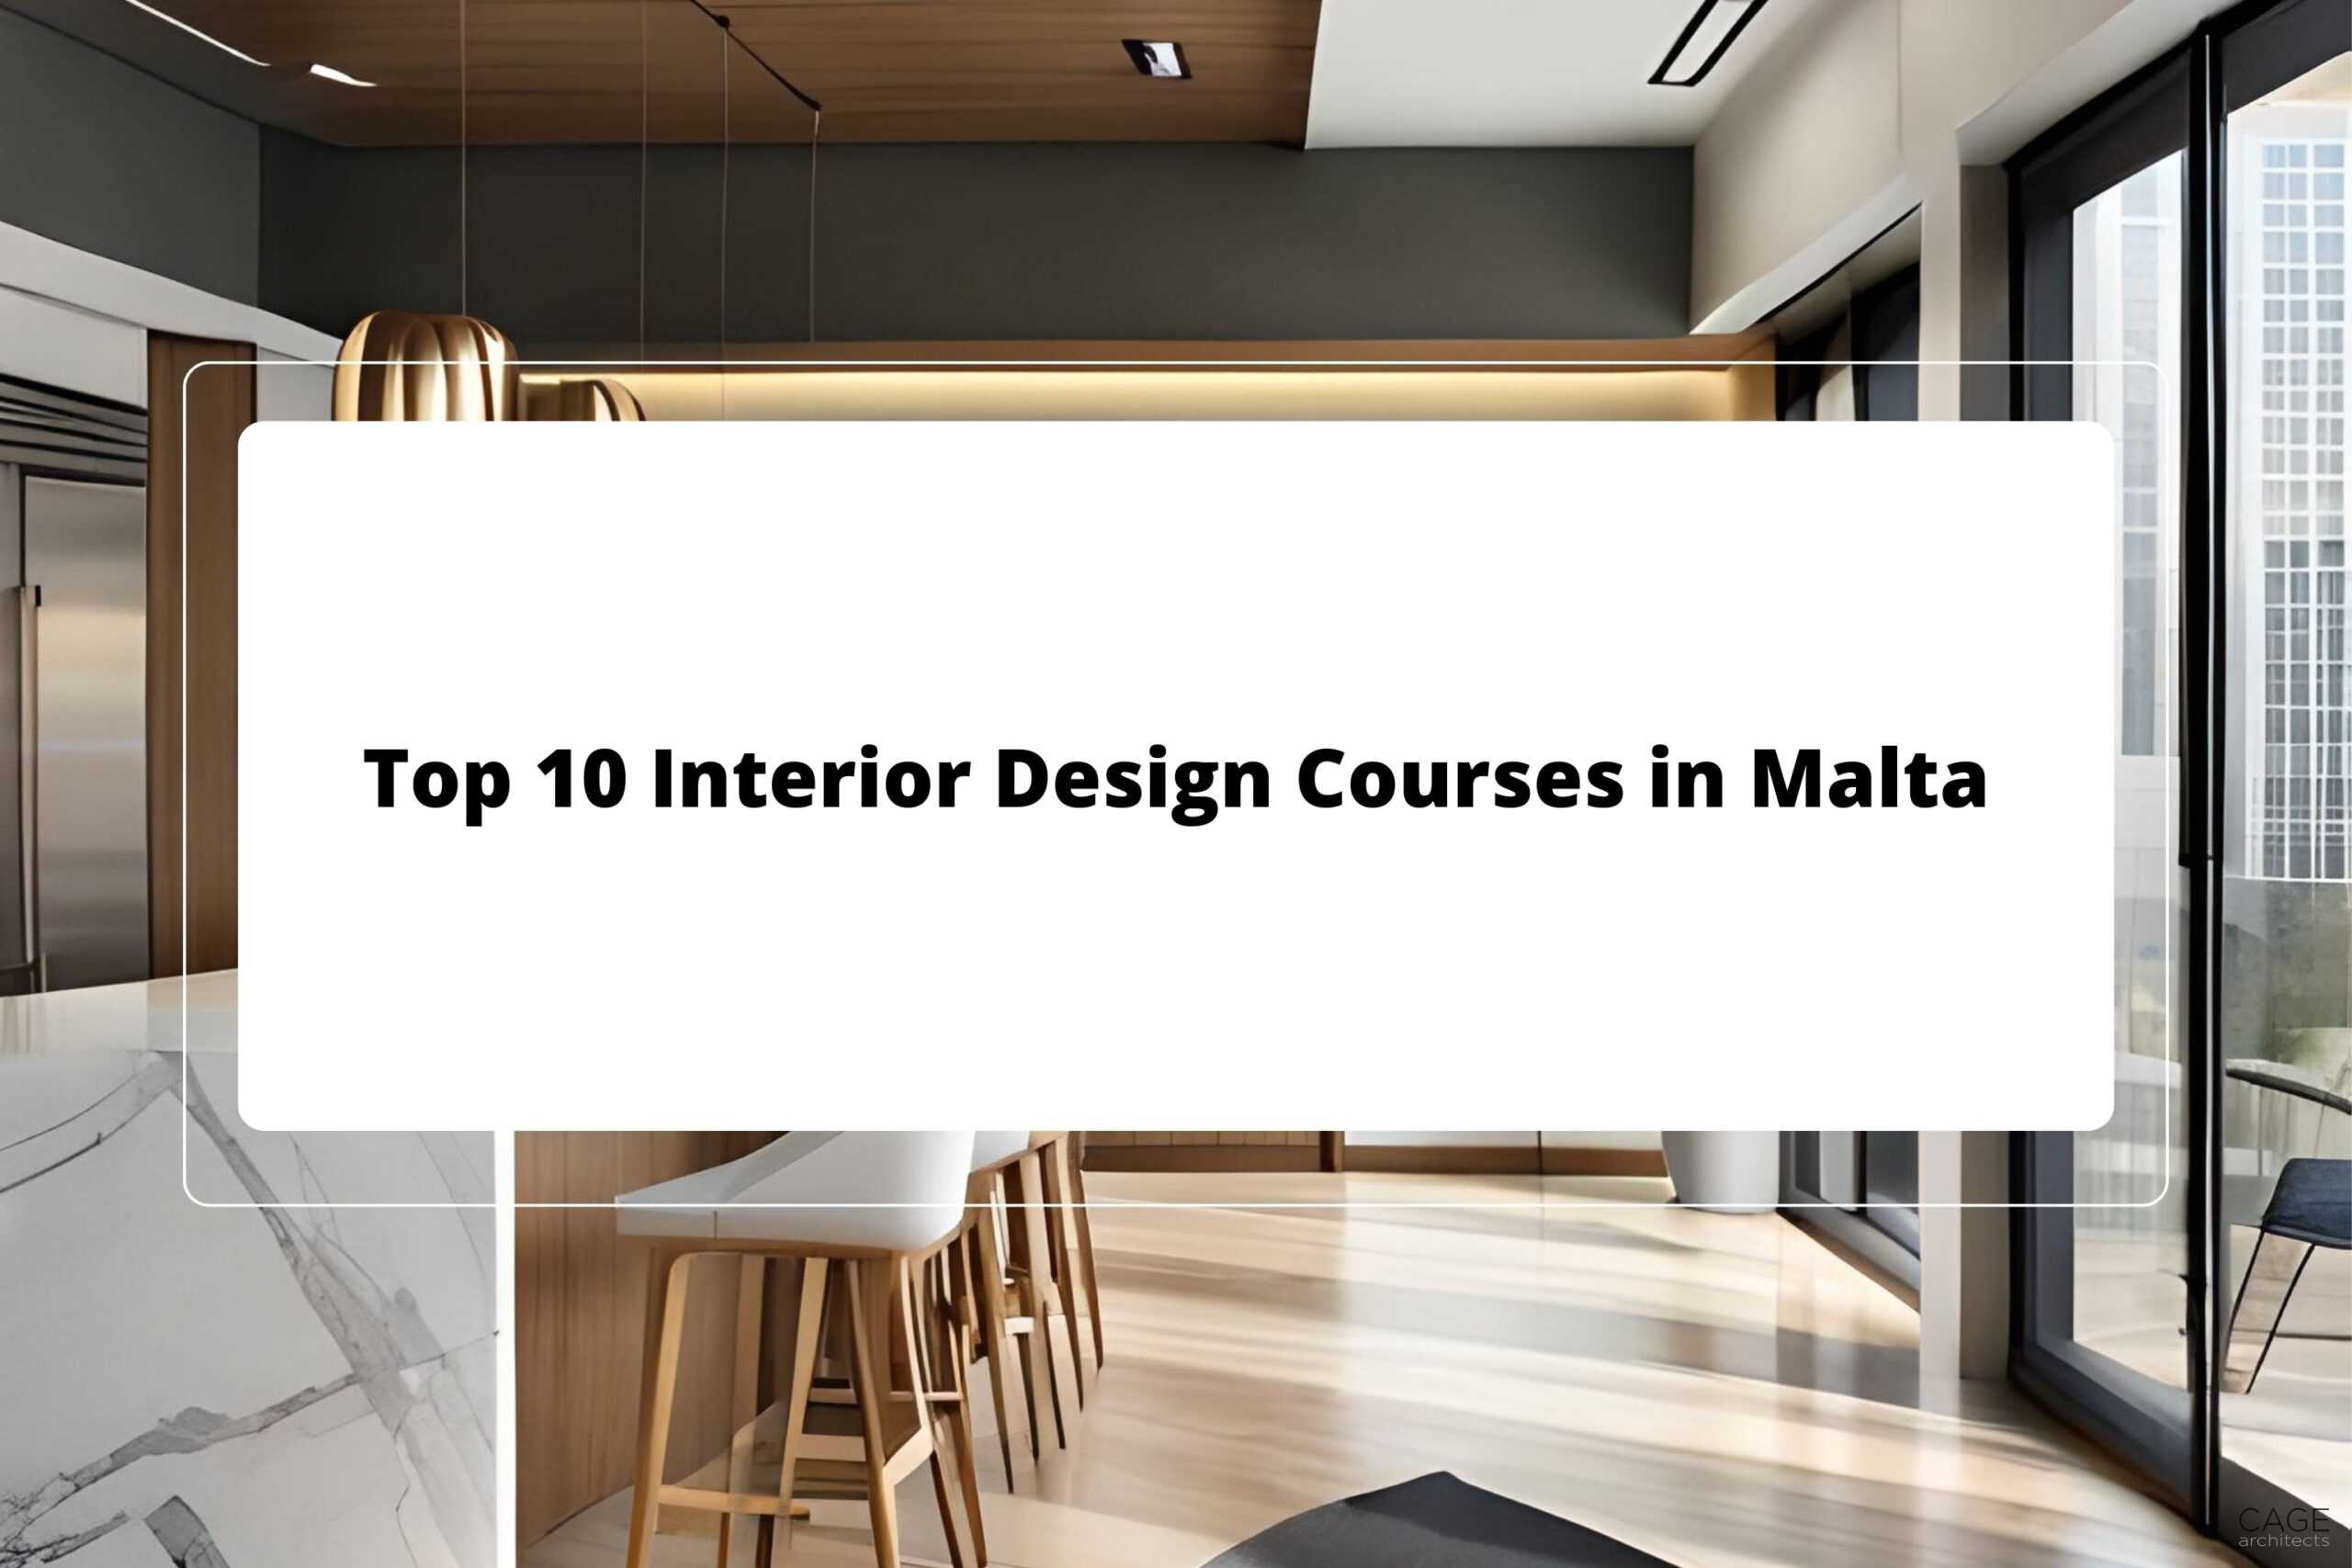 Top 10 Interior Design Courses in Malta: Your Comprehensive Guide